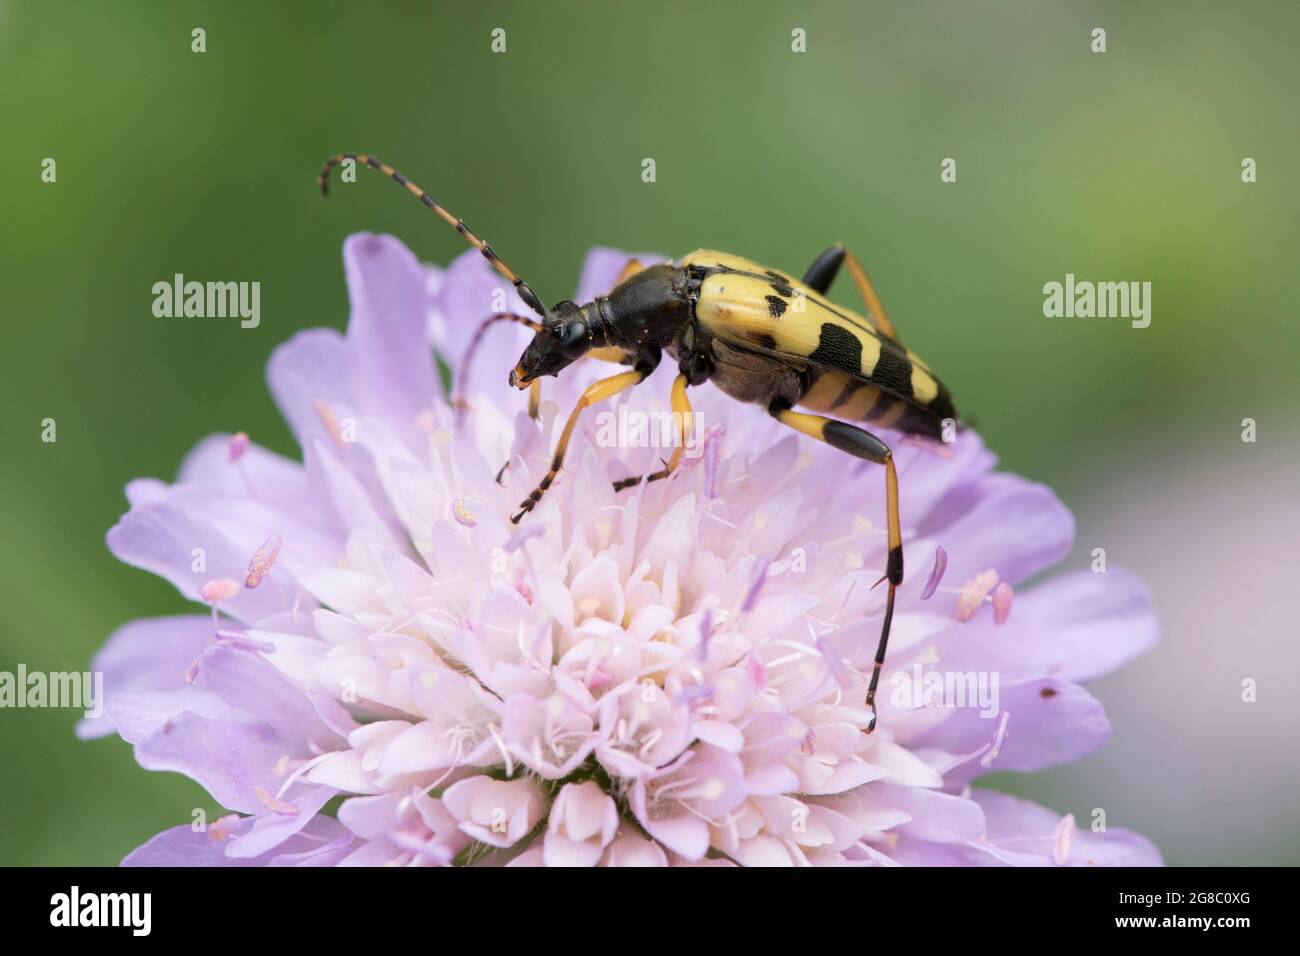 Rutpela maculata, Strangalia maculata, Longhorn beetle, Yellow and Black Longhorn Beetle, feeding on Field Scabious, Knautia arvensis, July, UK. Stock Photo